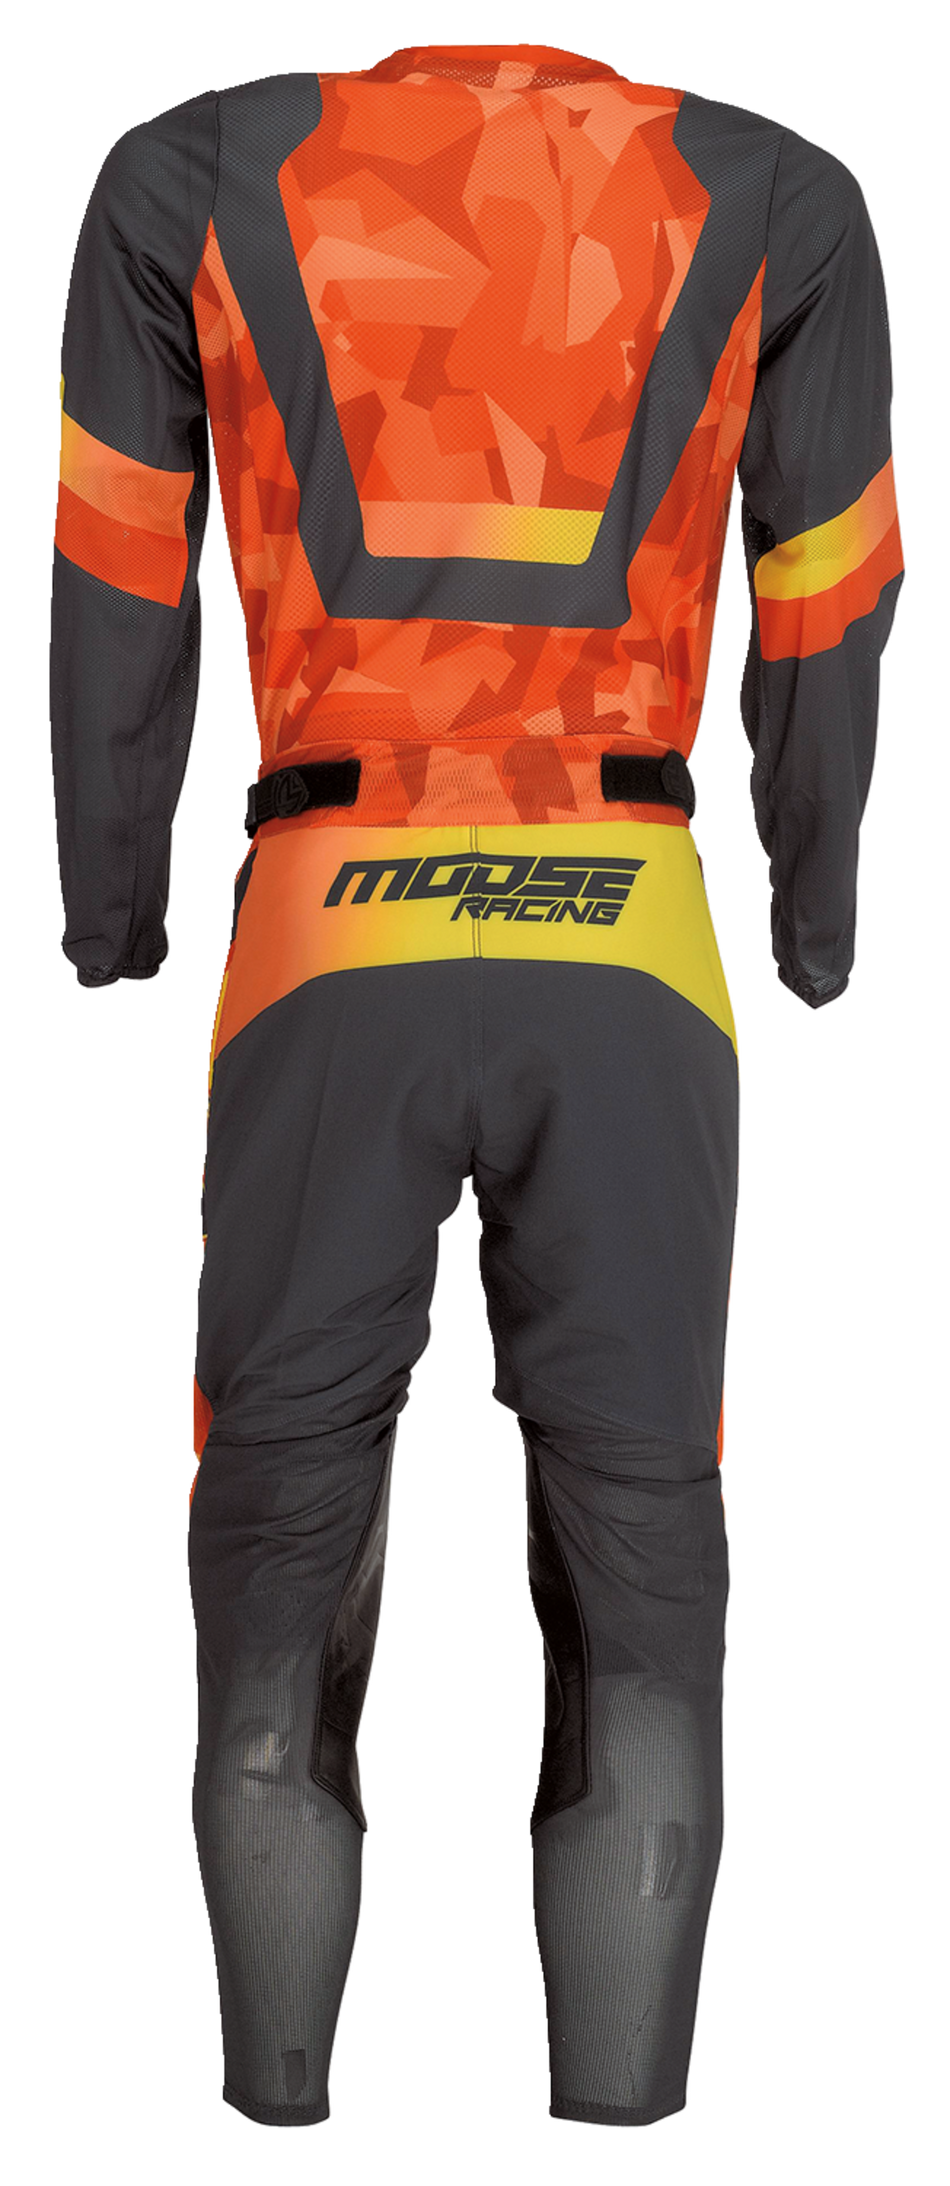 Camiseta MOOSE RACING Sahara™ - Naranja/Negro - Grande 2910-7224 